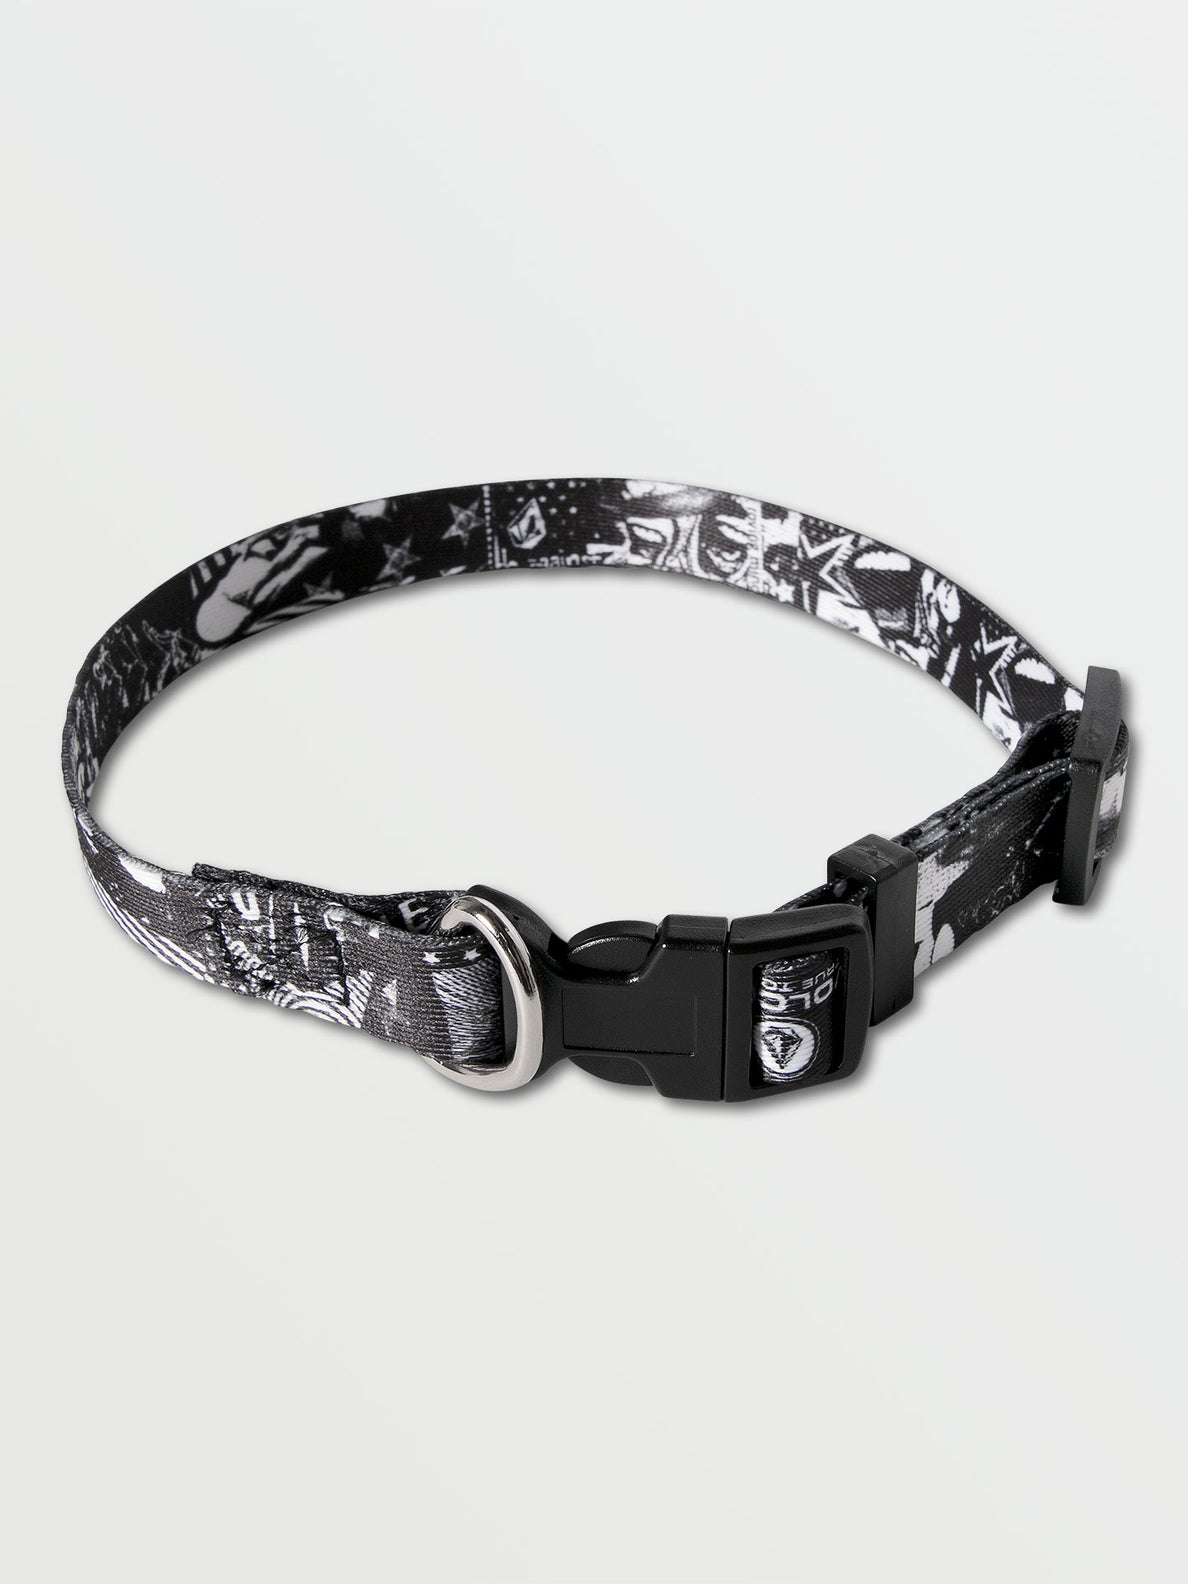 Volcom Collage Dog Collar - Black White